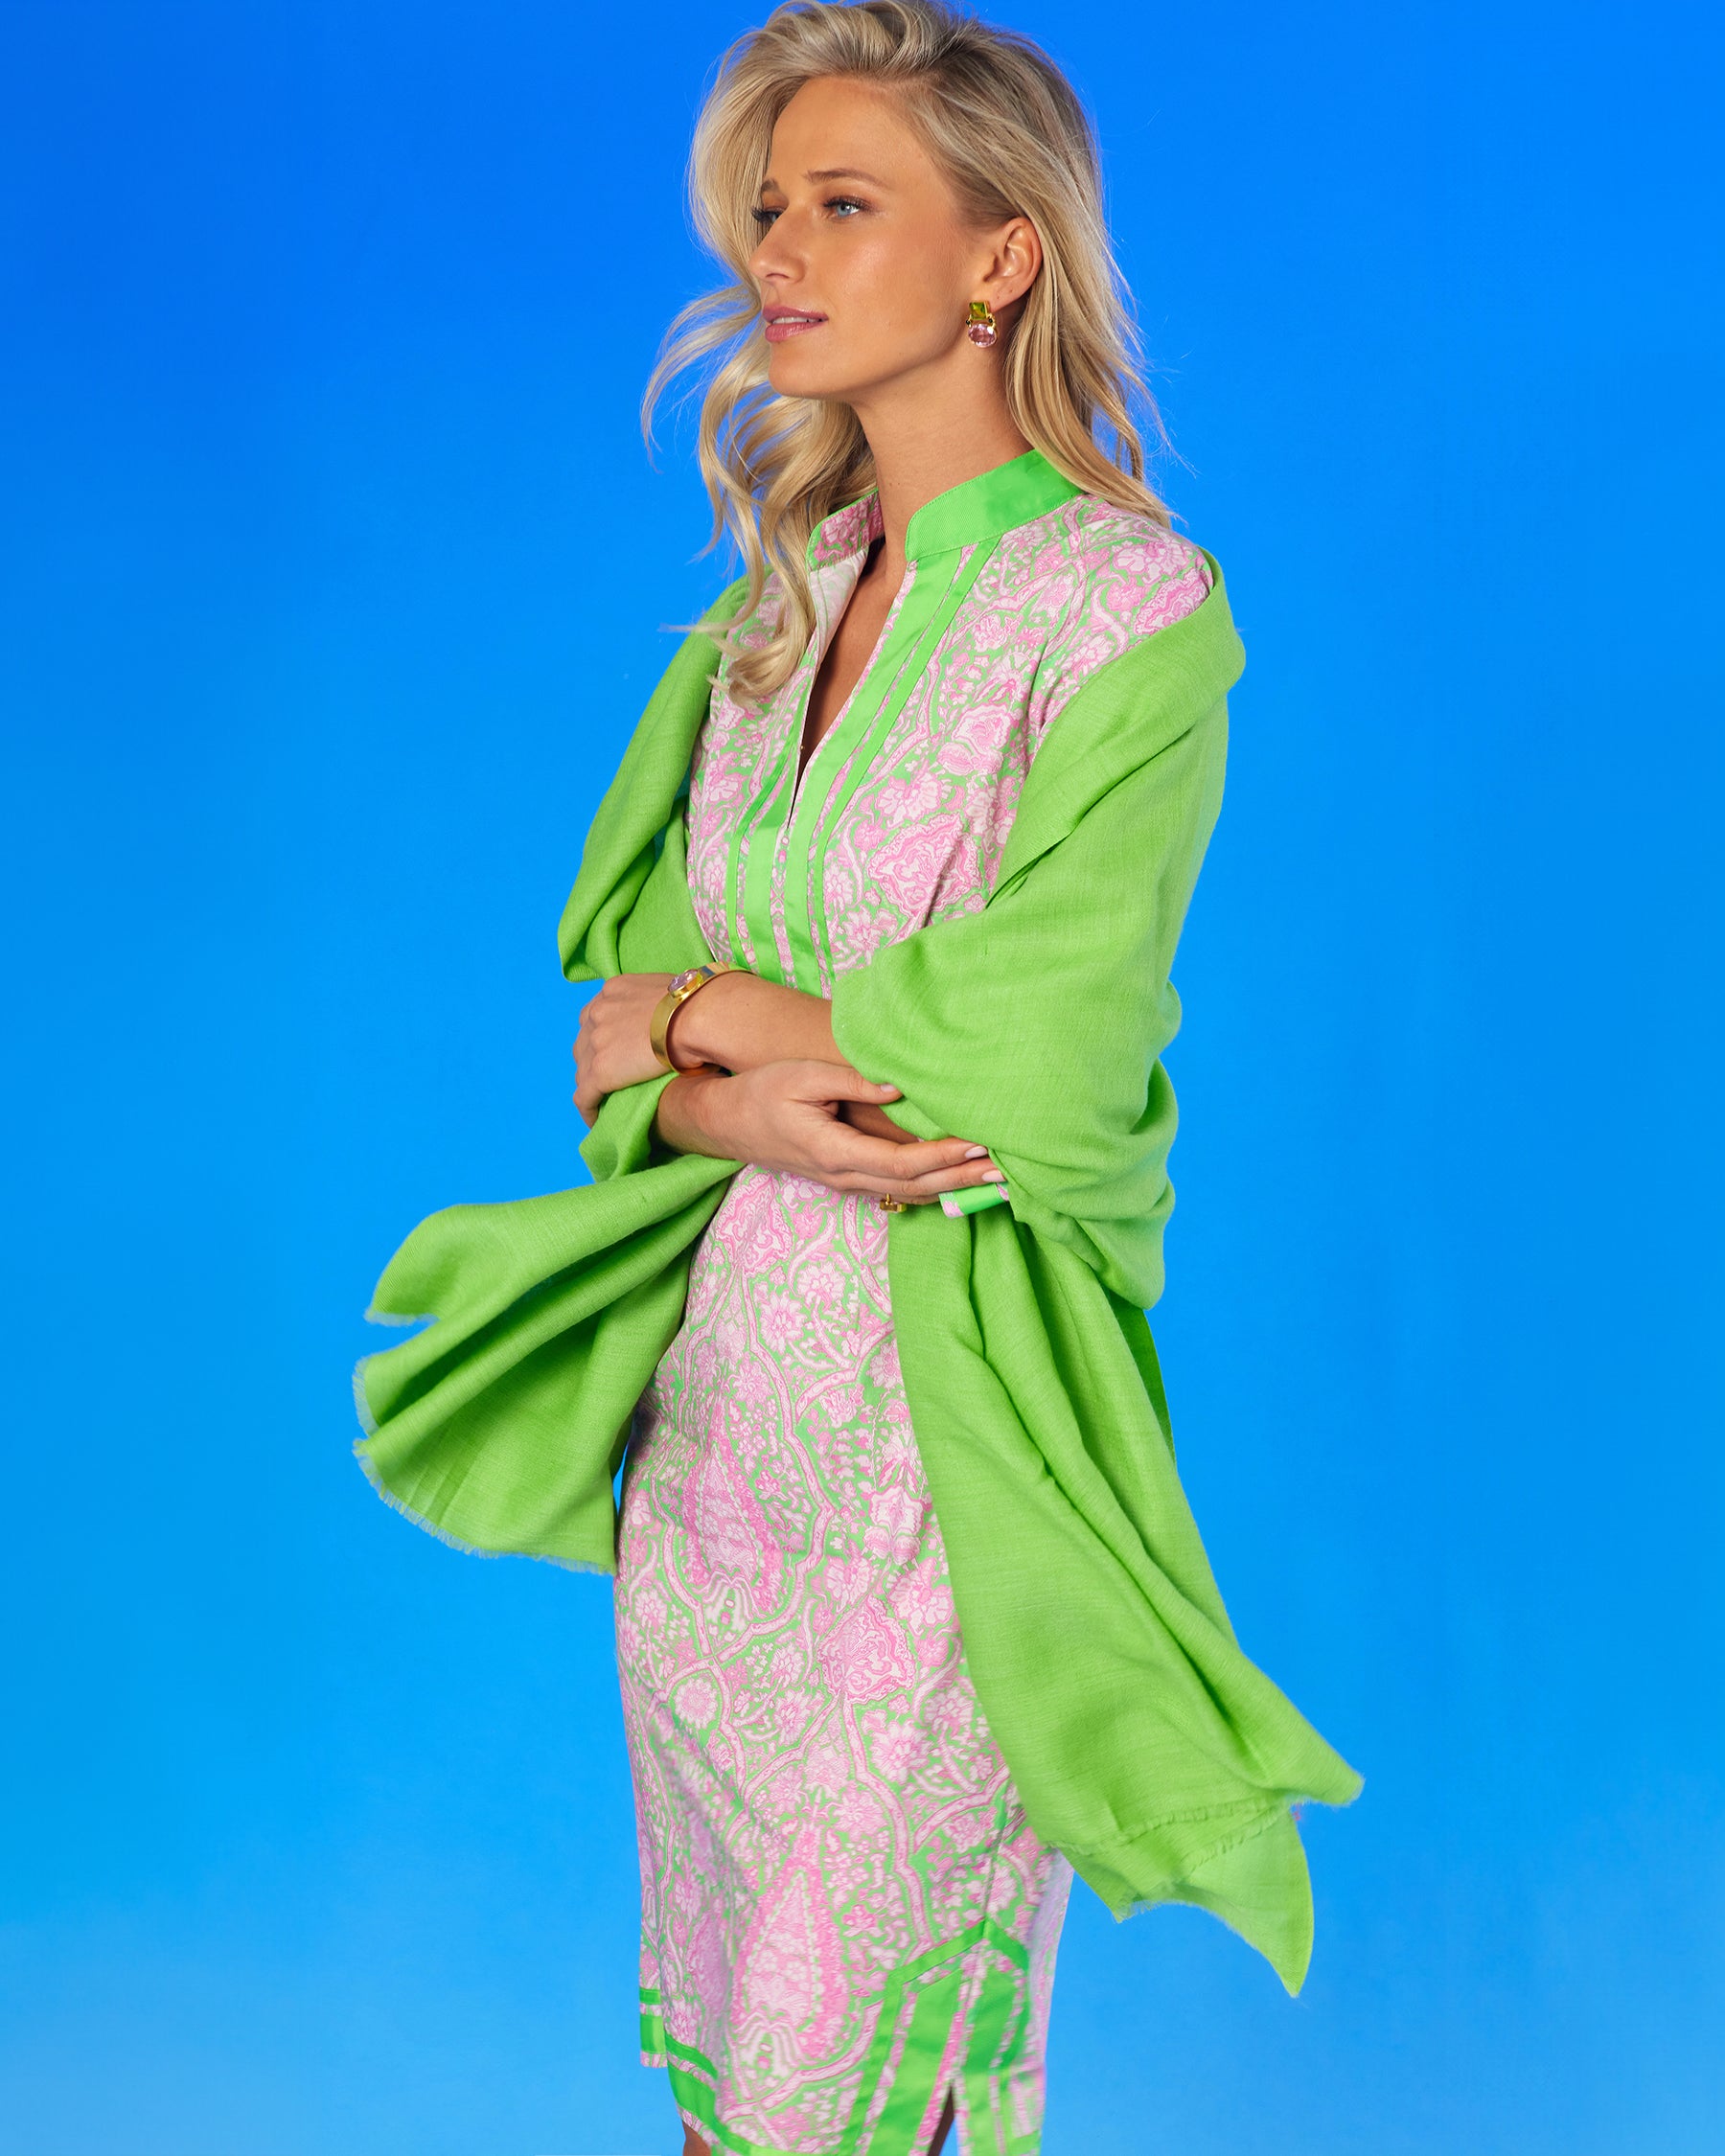 Capri Short Tunic Dress in Pink and Mint Julep Green Paisley